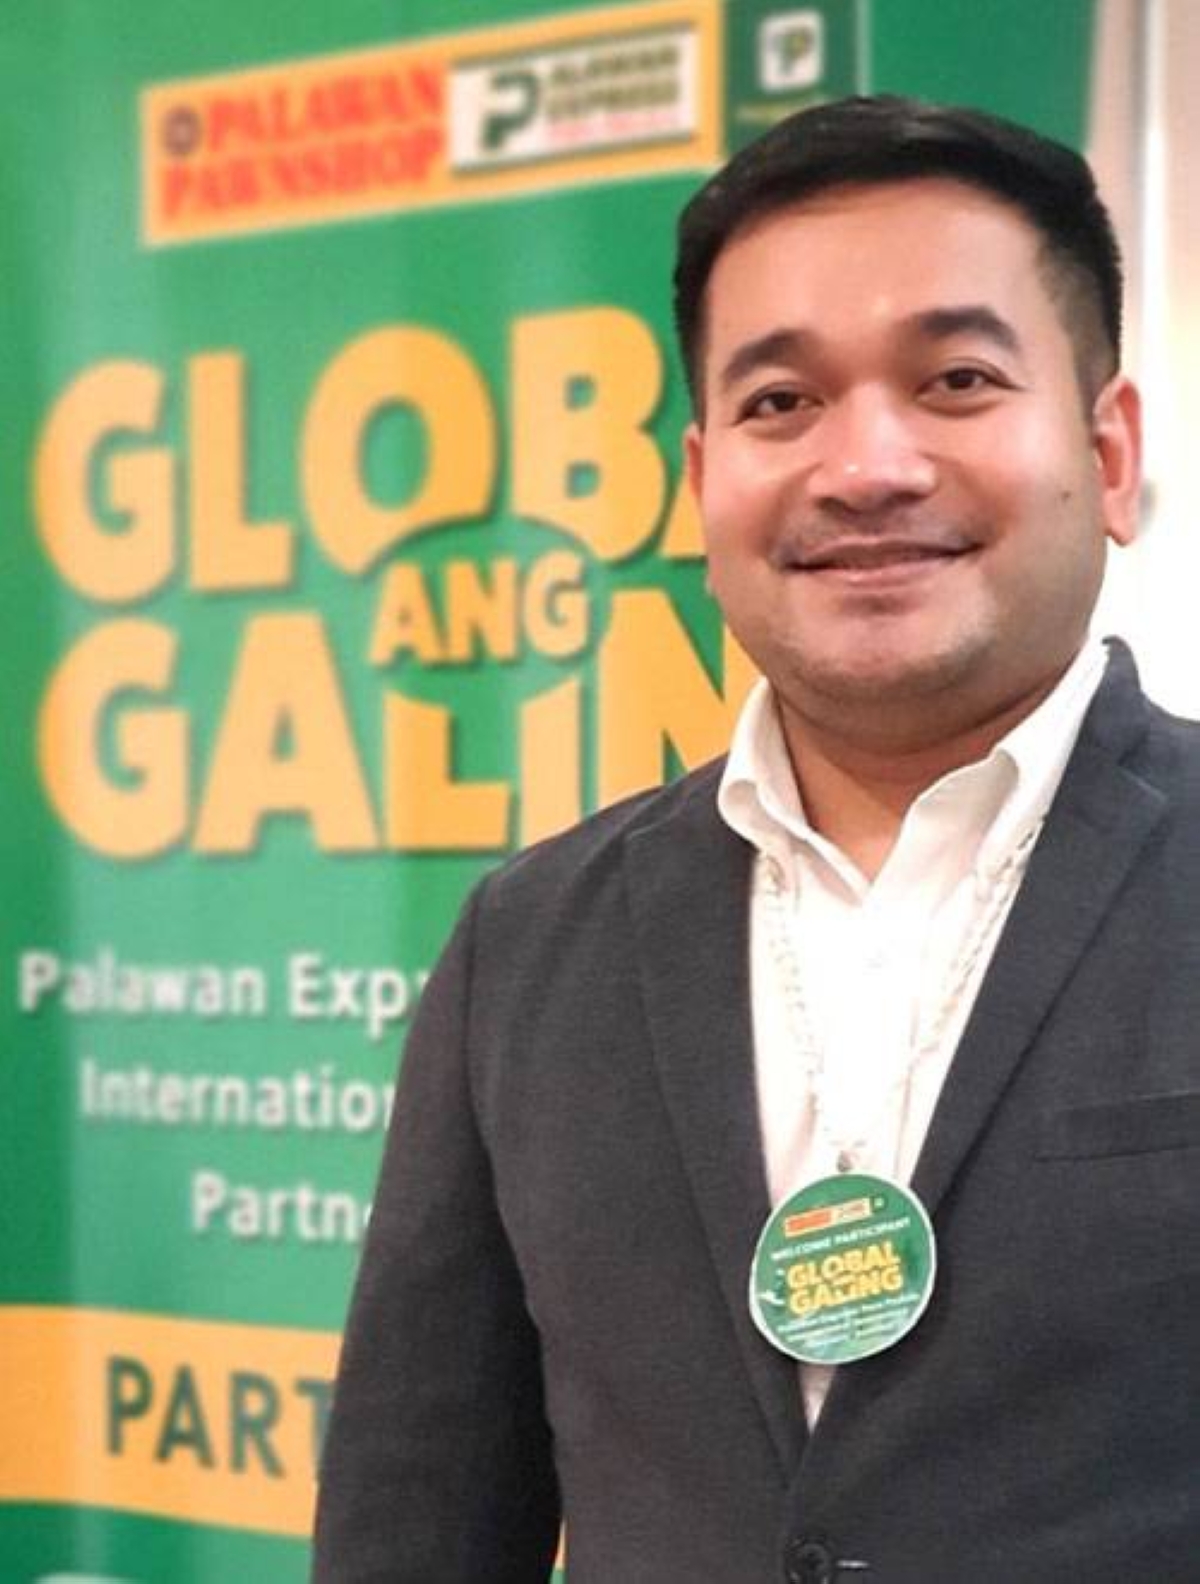 Bernard Kaibigan, Enterprise Marketing Head of Palawan Pawnshop Group